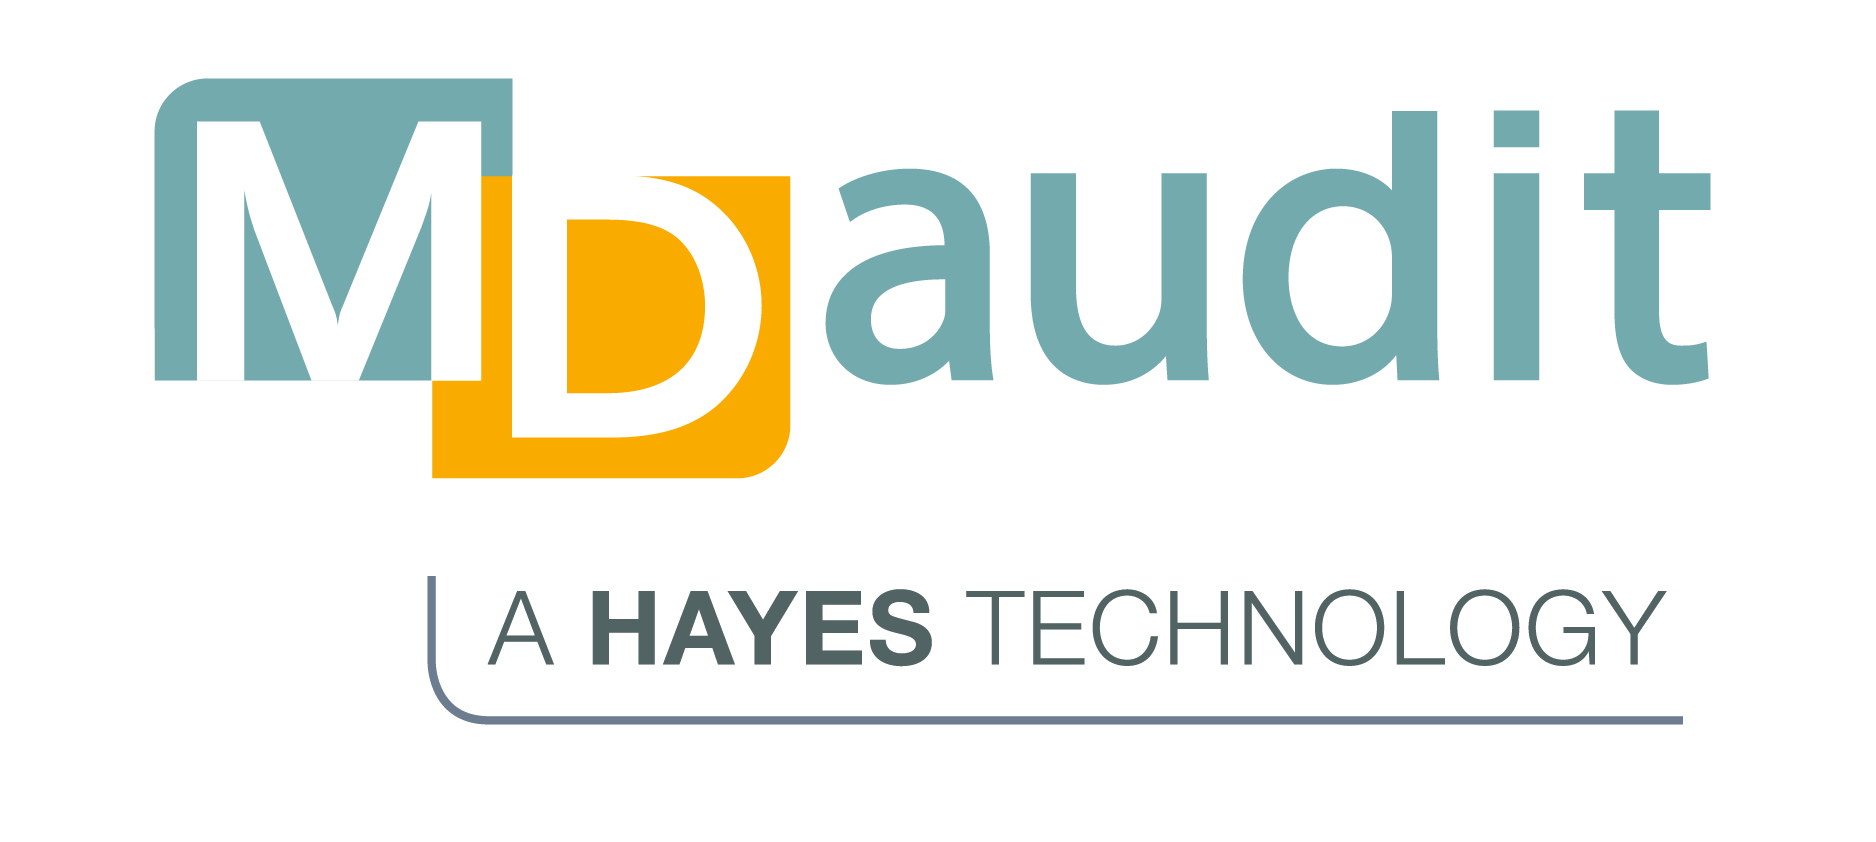 MDaudit, a Hayes Technology